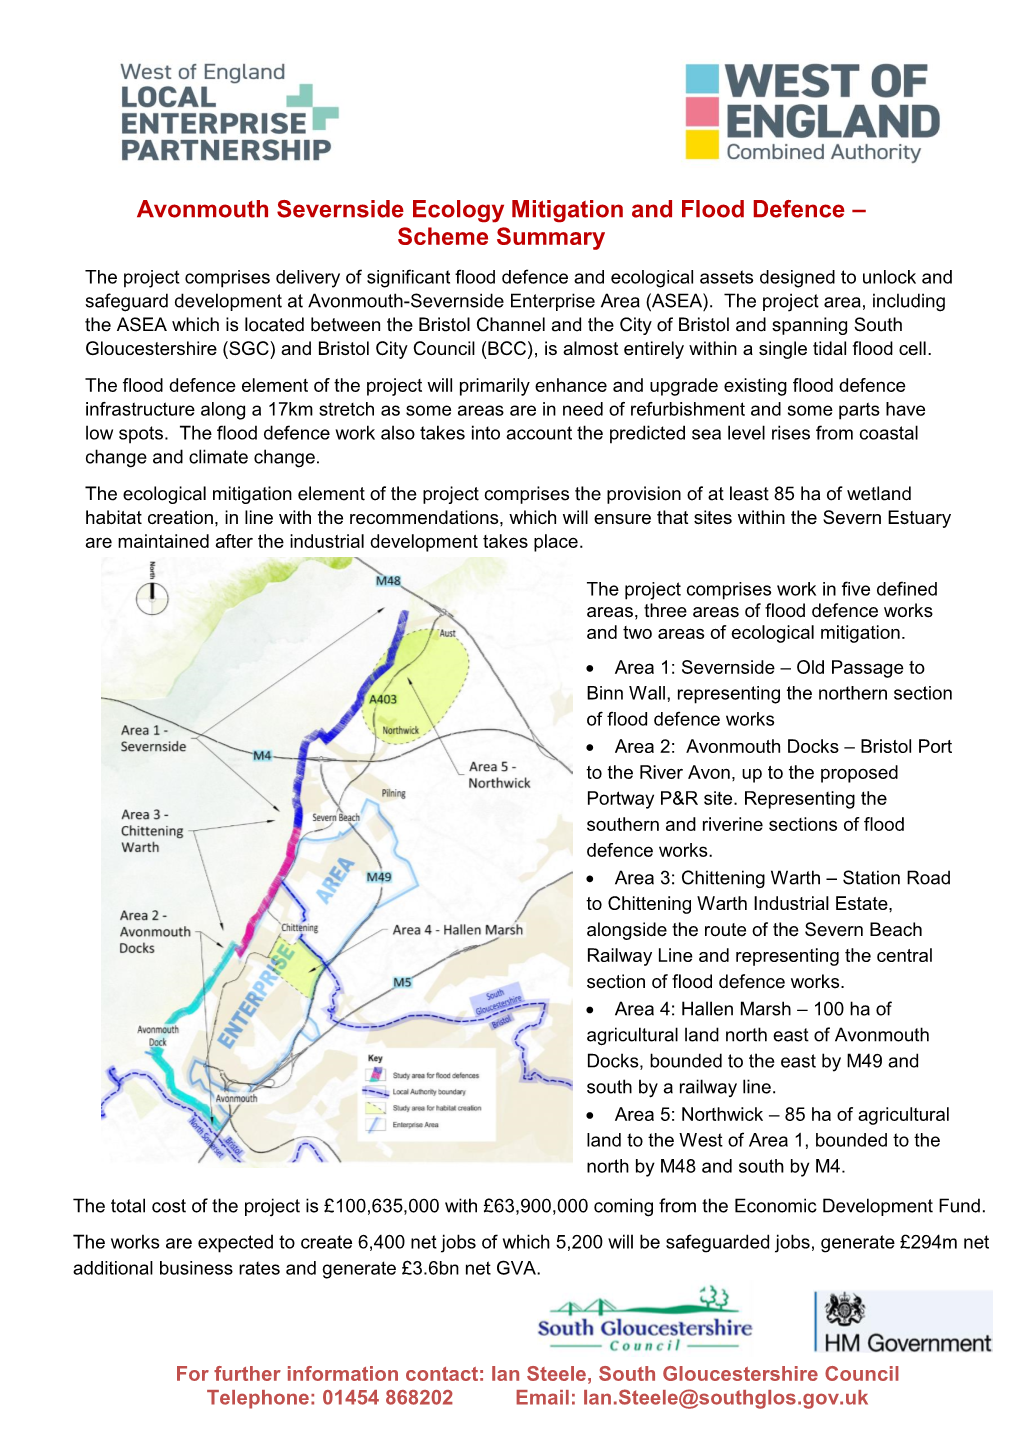 Avonmouth Severnside Ecology Mitigation and Flood Defence – Scheme Summary